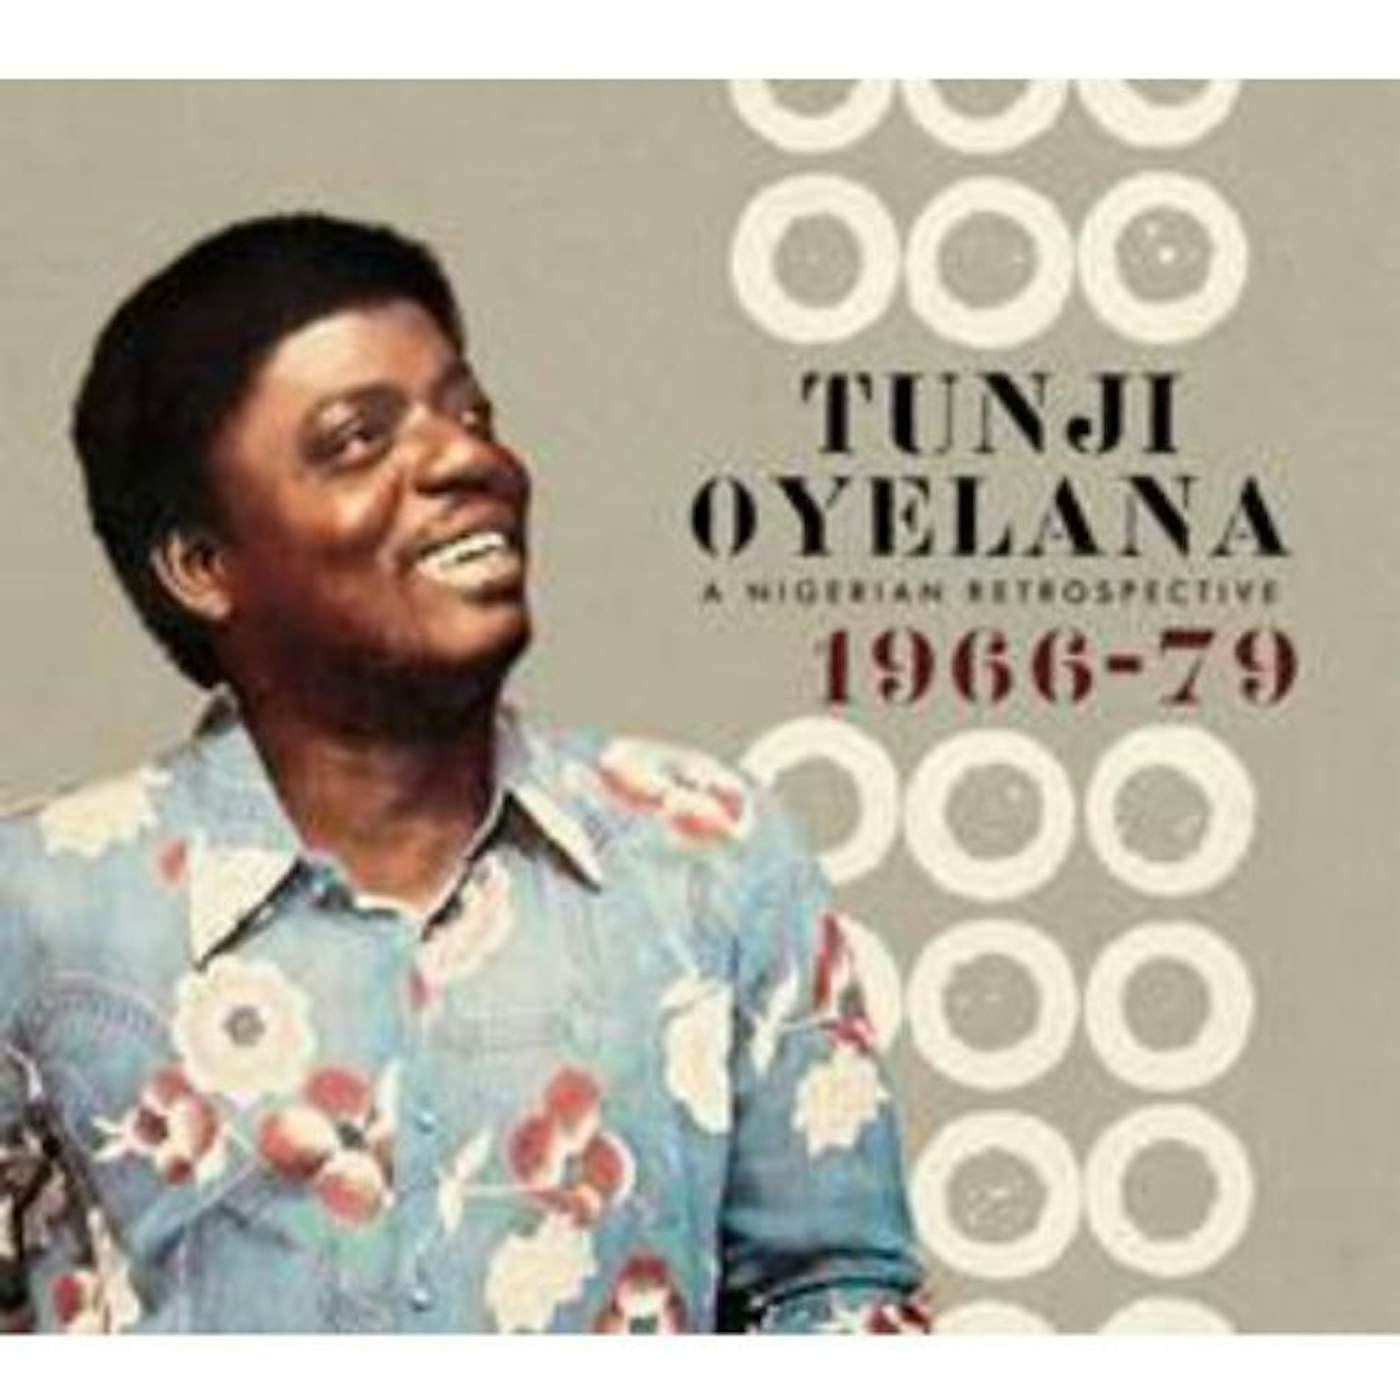 Tunji Oyelana NIGERIAN RETROSPECTIVE 1966-79 Vinyl Record